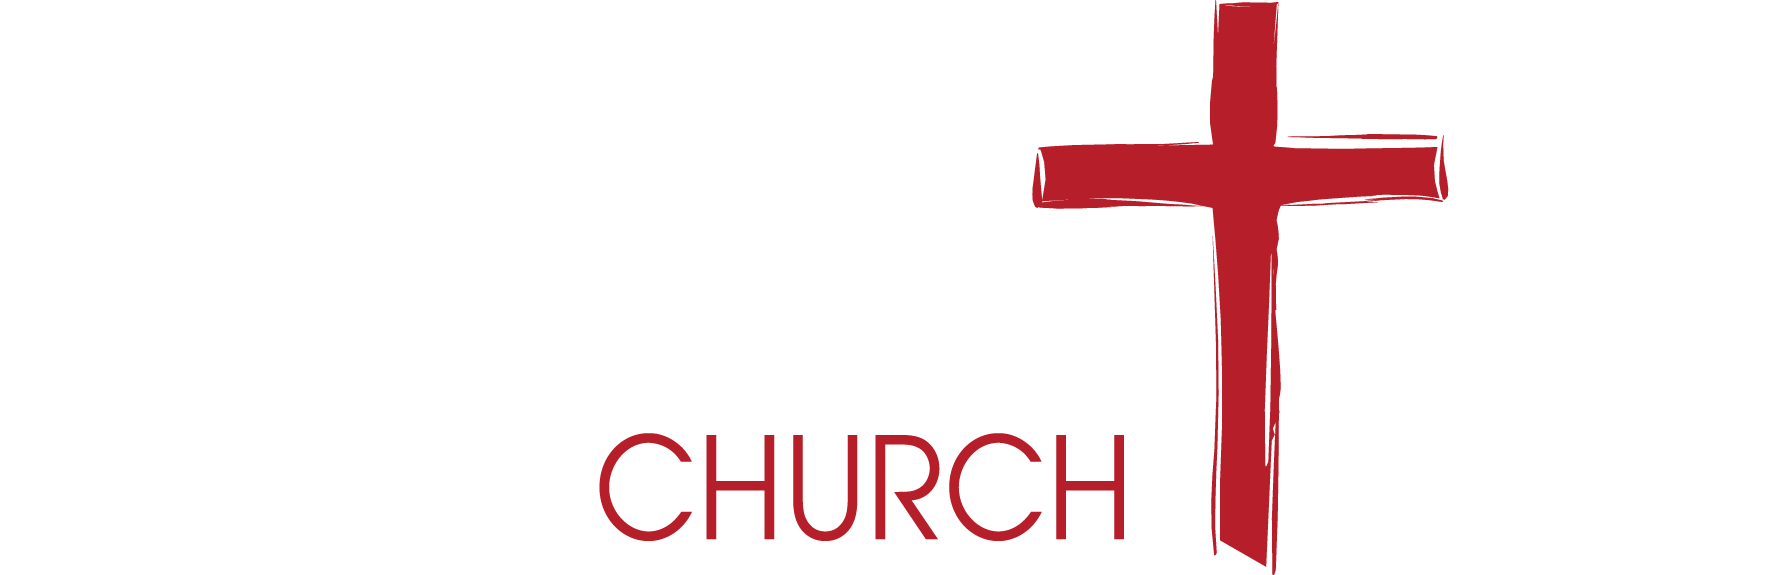 Fellowship Bible Church | Tulsa (Redesign)